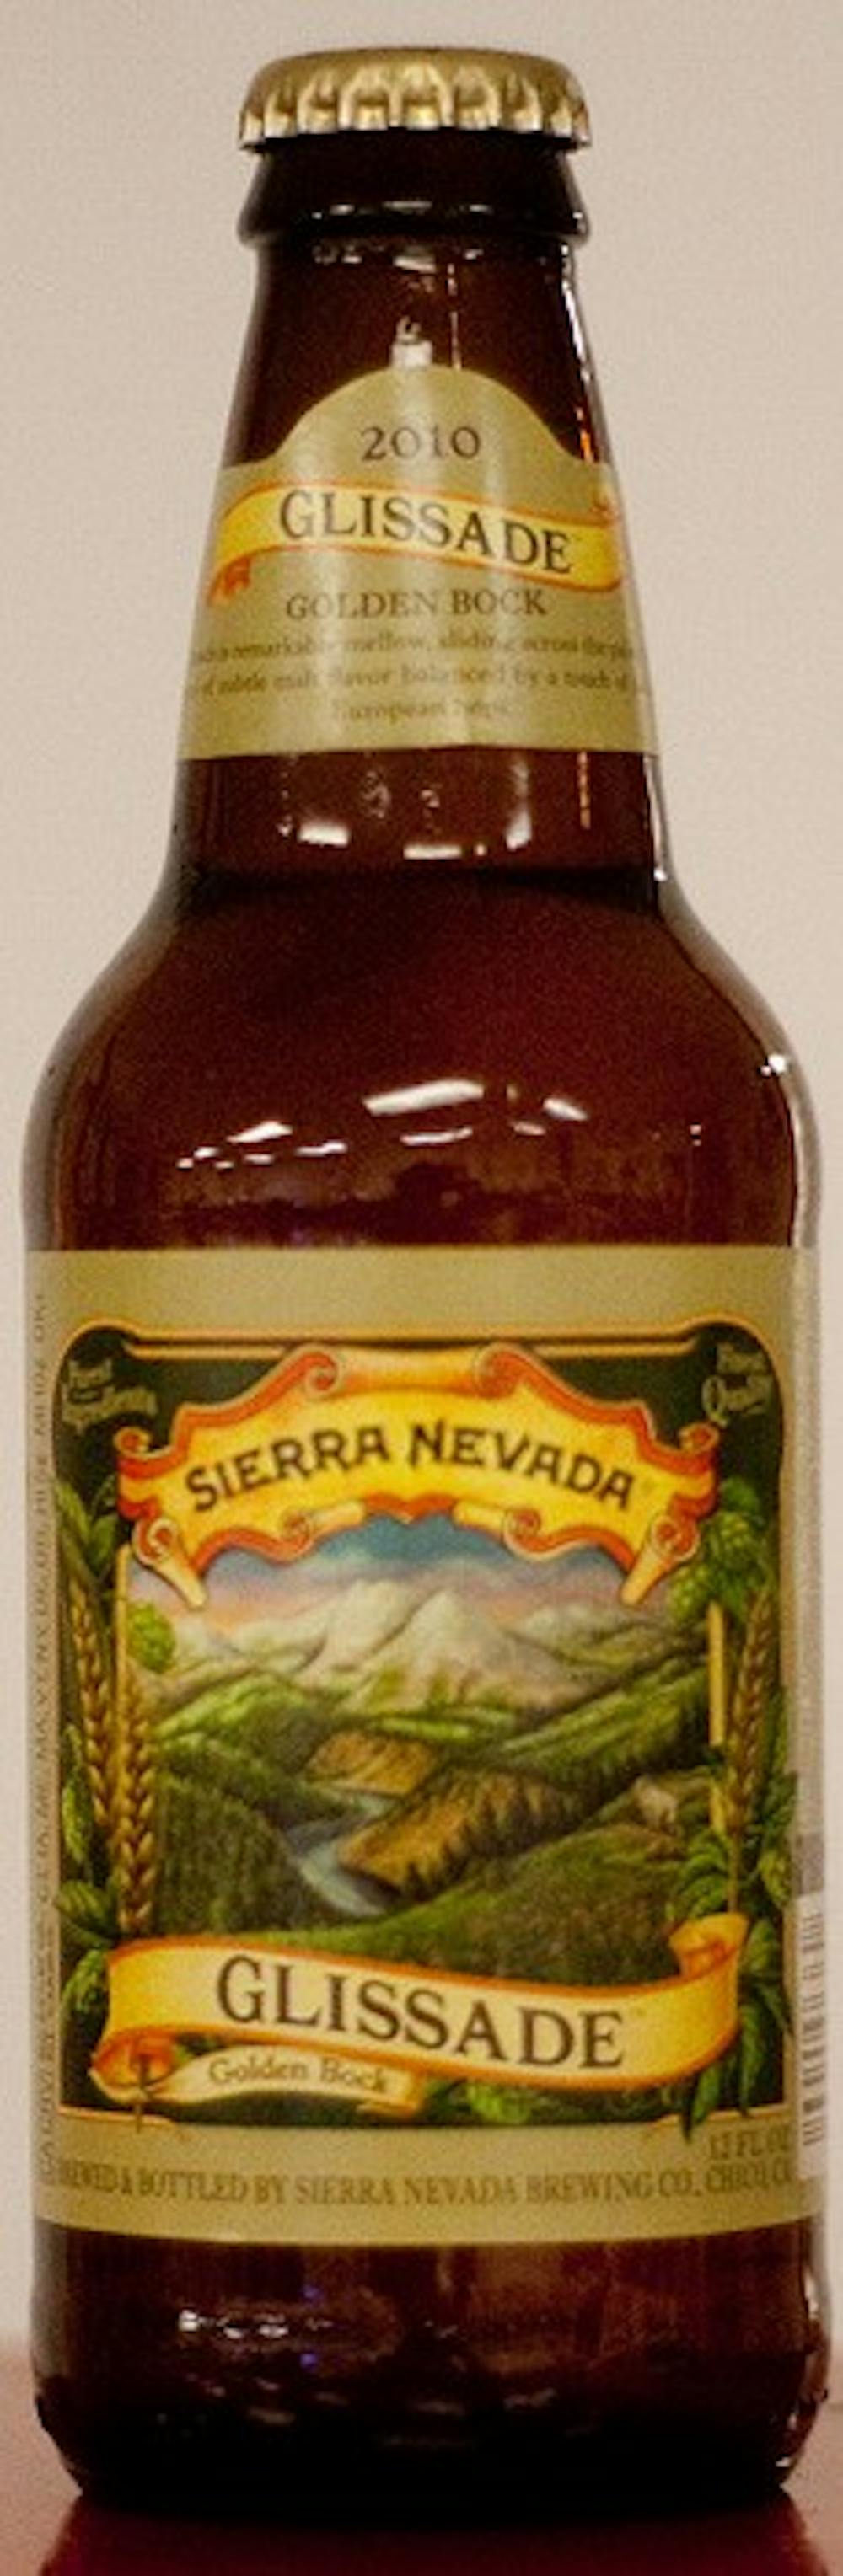 New Beer Review: Sierra Nevada Glissade